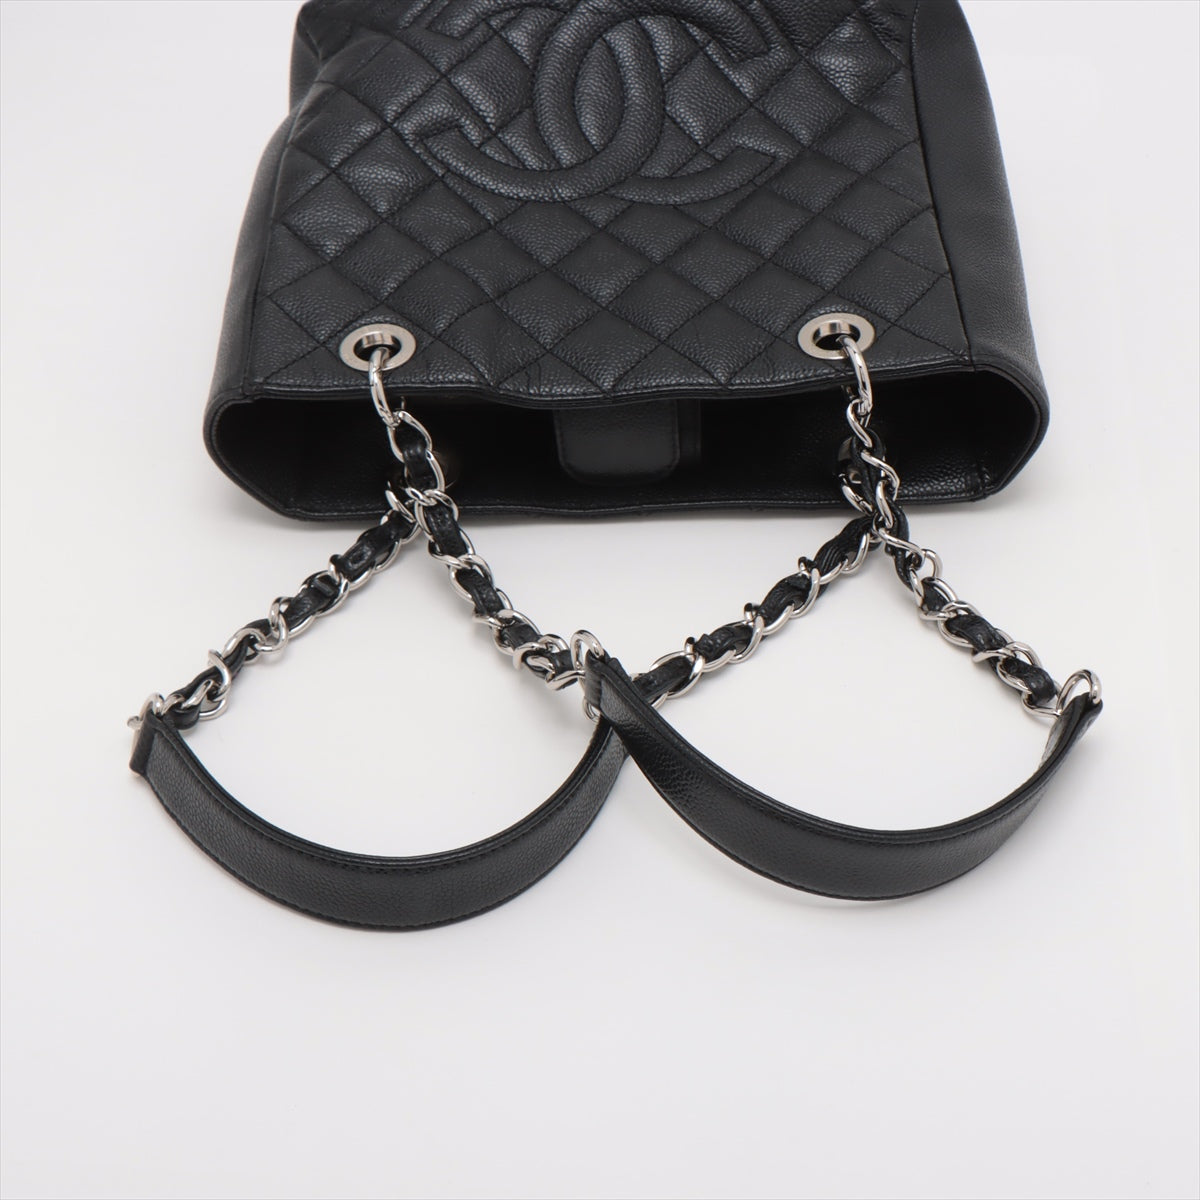 Chanel PST Caviar S Tote Top Bag Black Silver Gold  15th